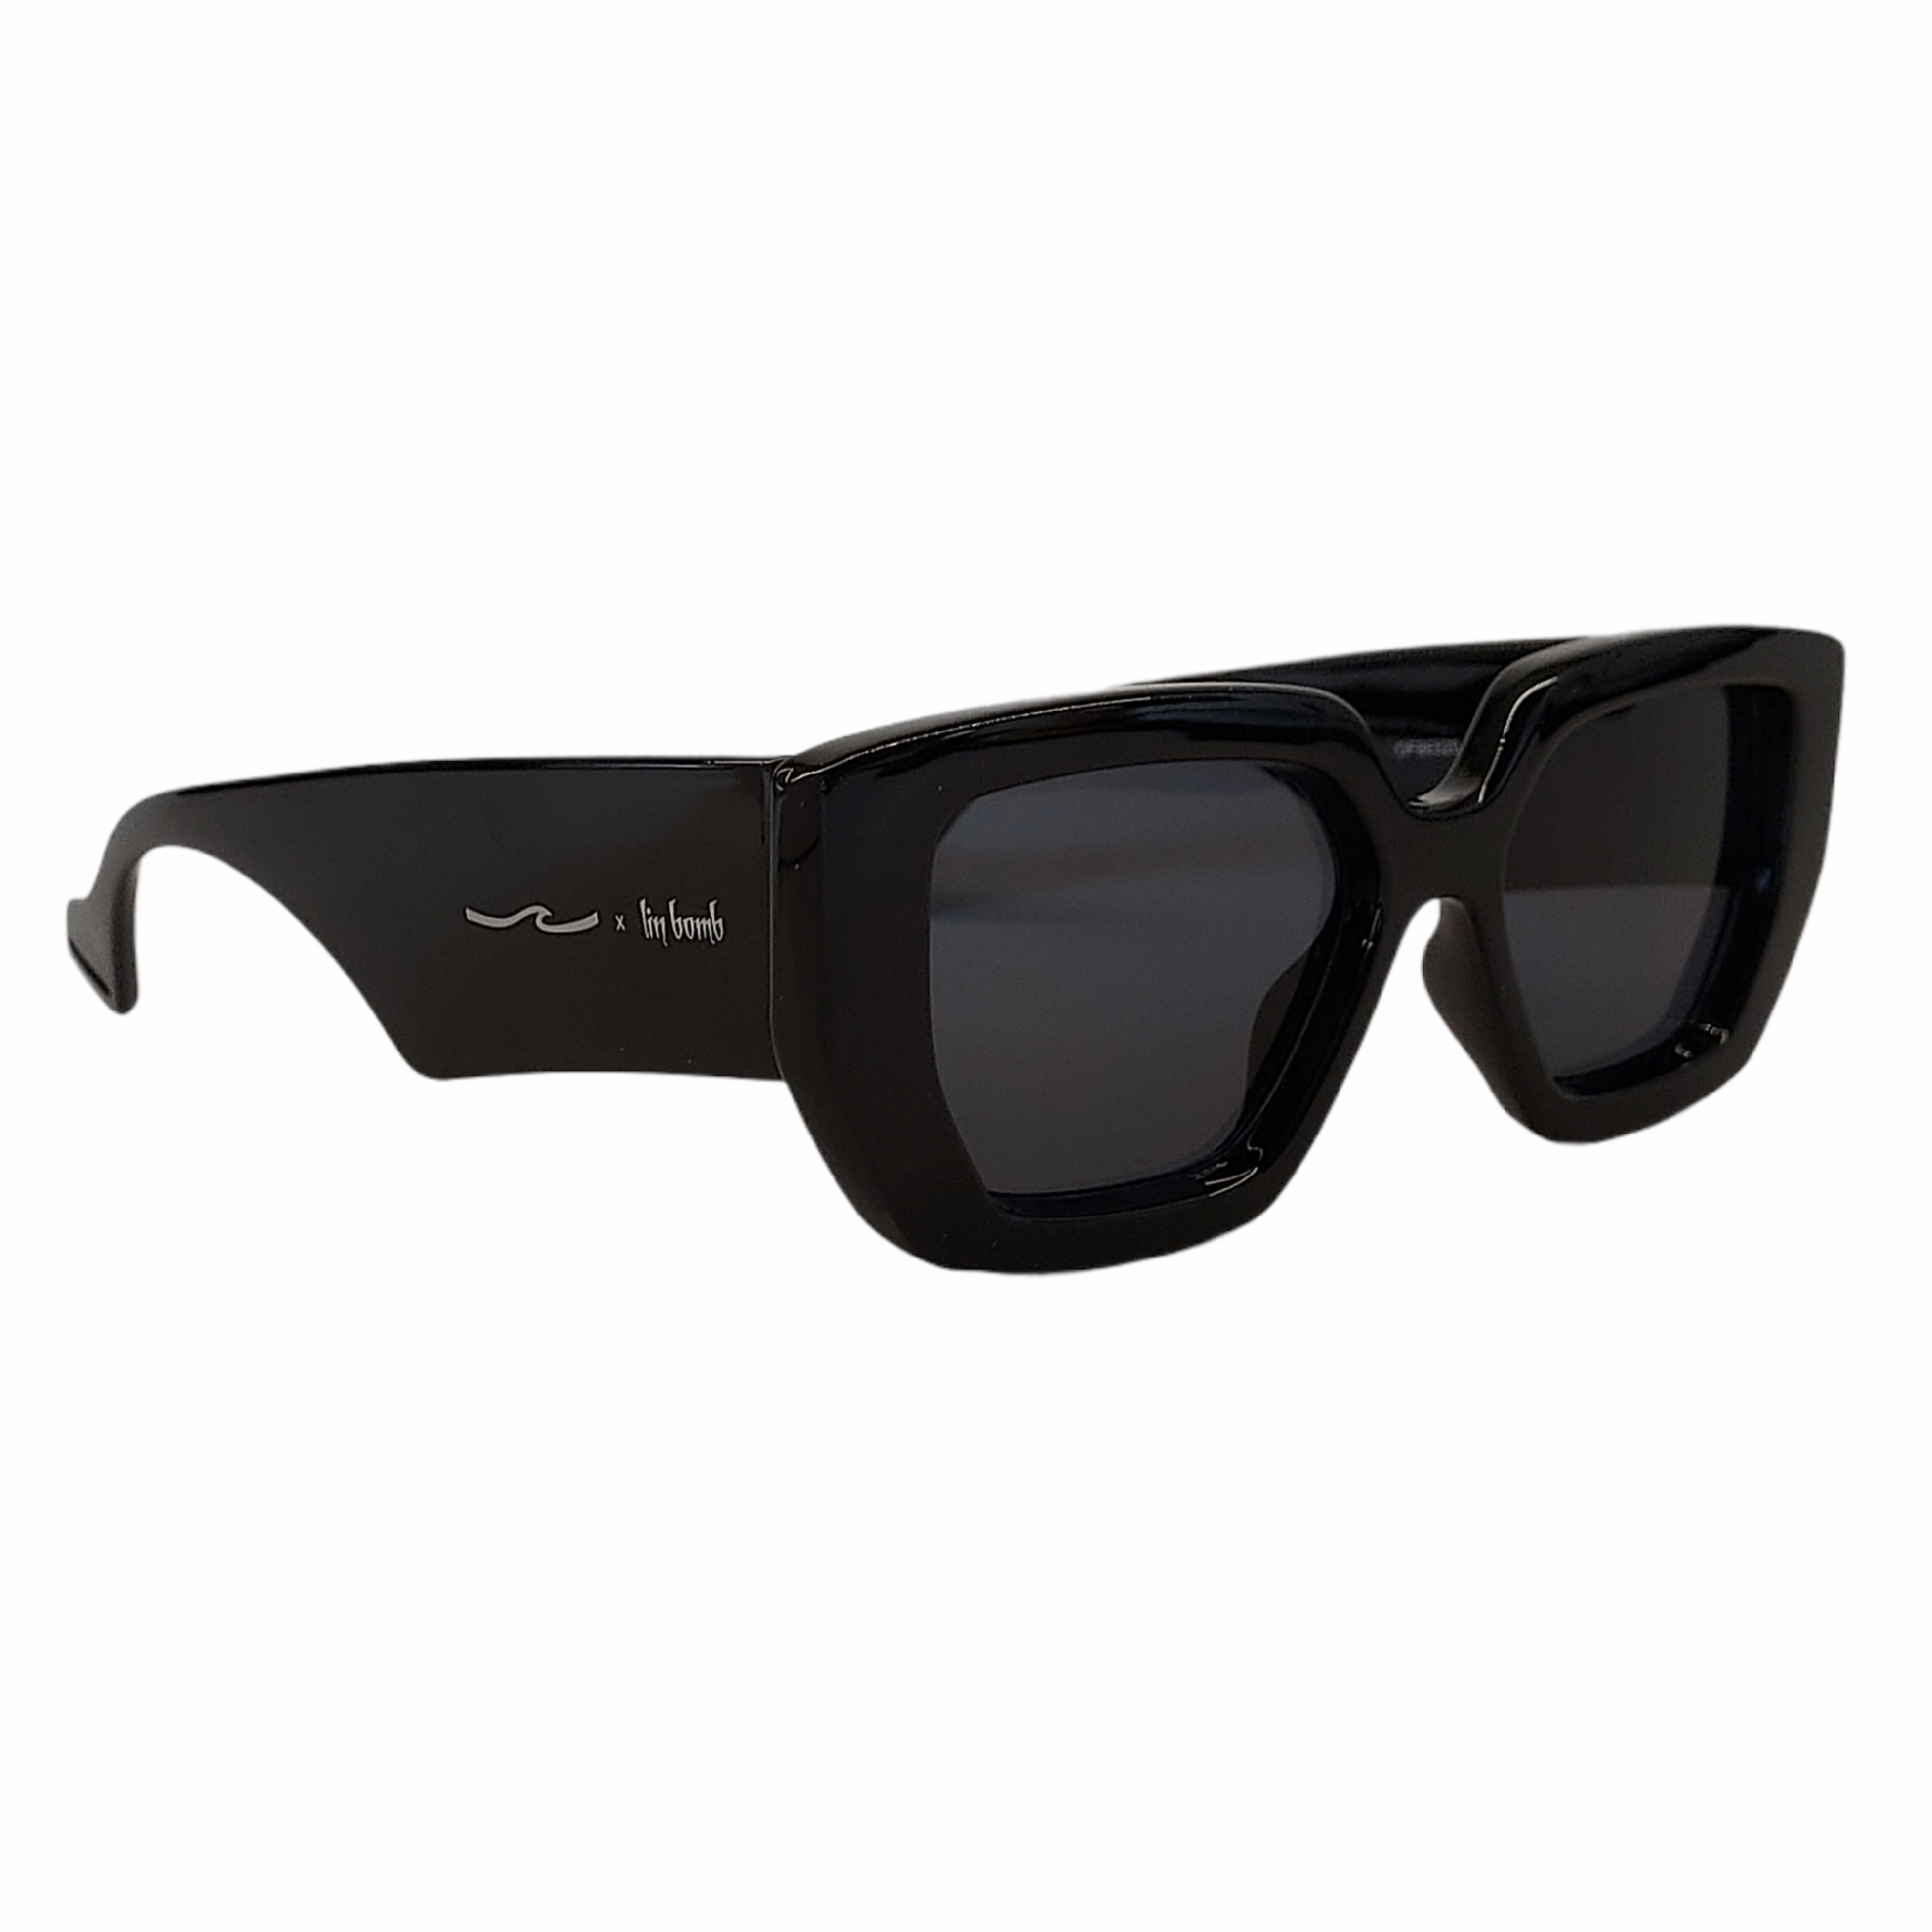 B52 Midway Promo Sunglasses